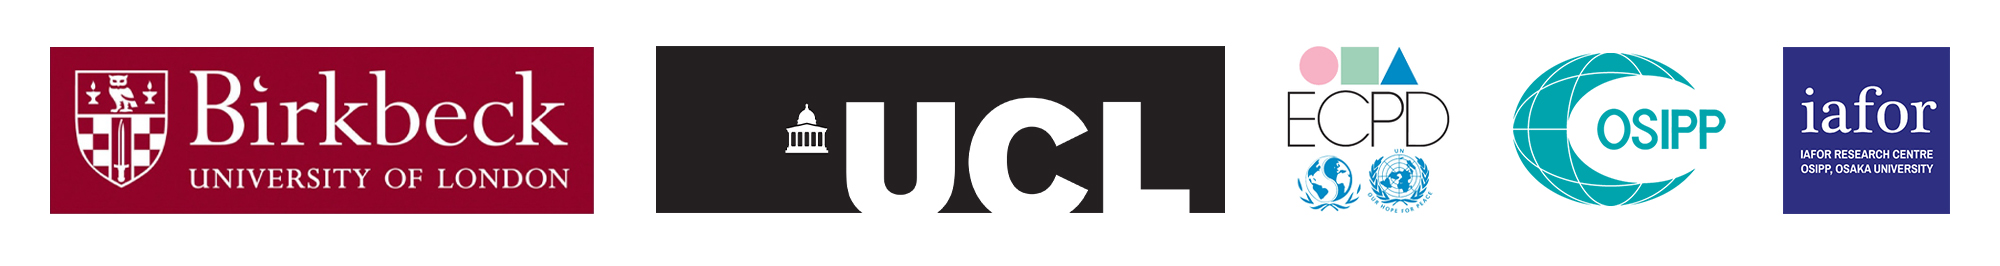 Partner Logos: Birkbeck, University of London, UCL, OSIPP, IAFOR Research Centre